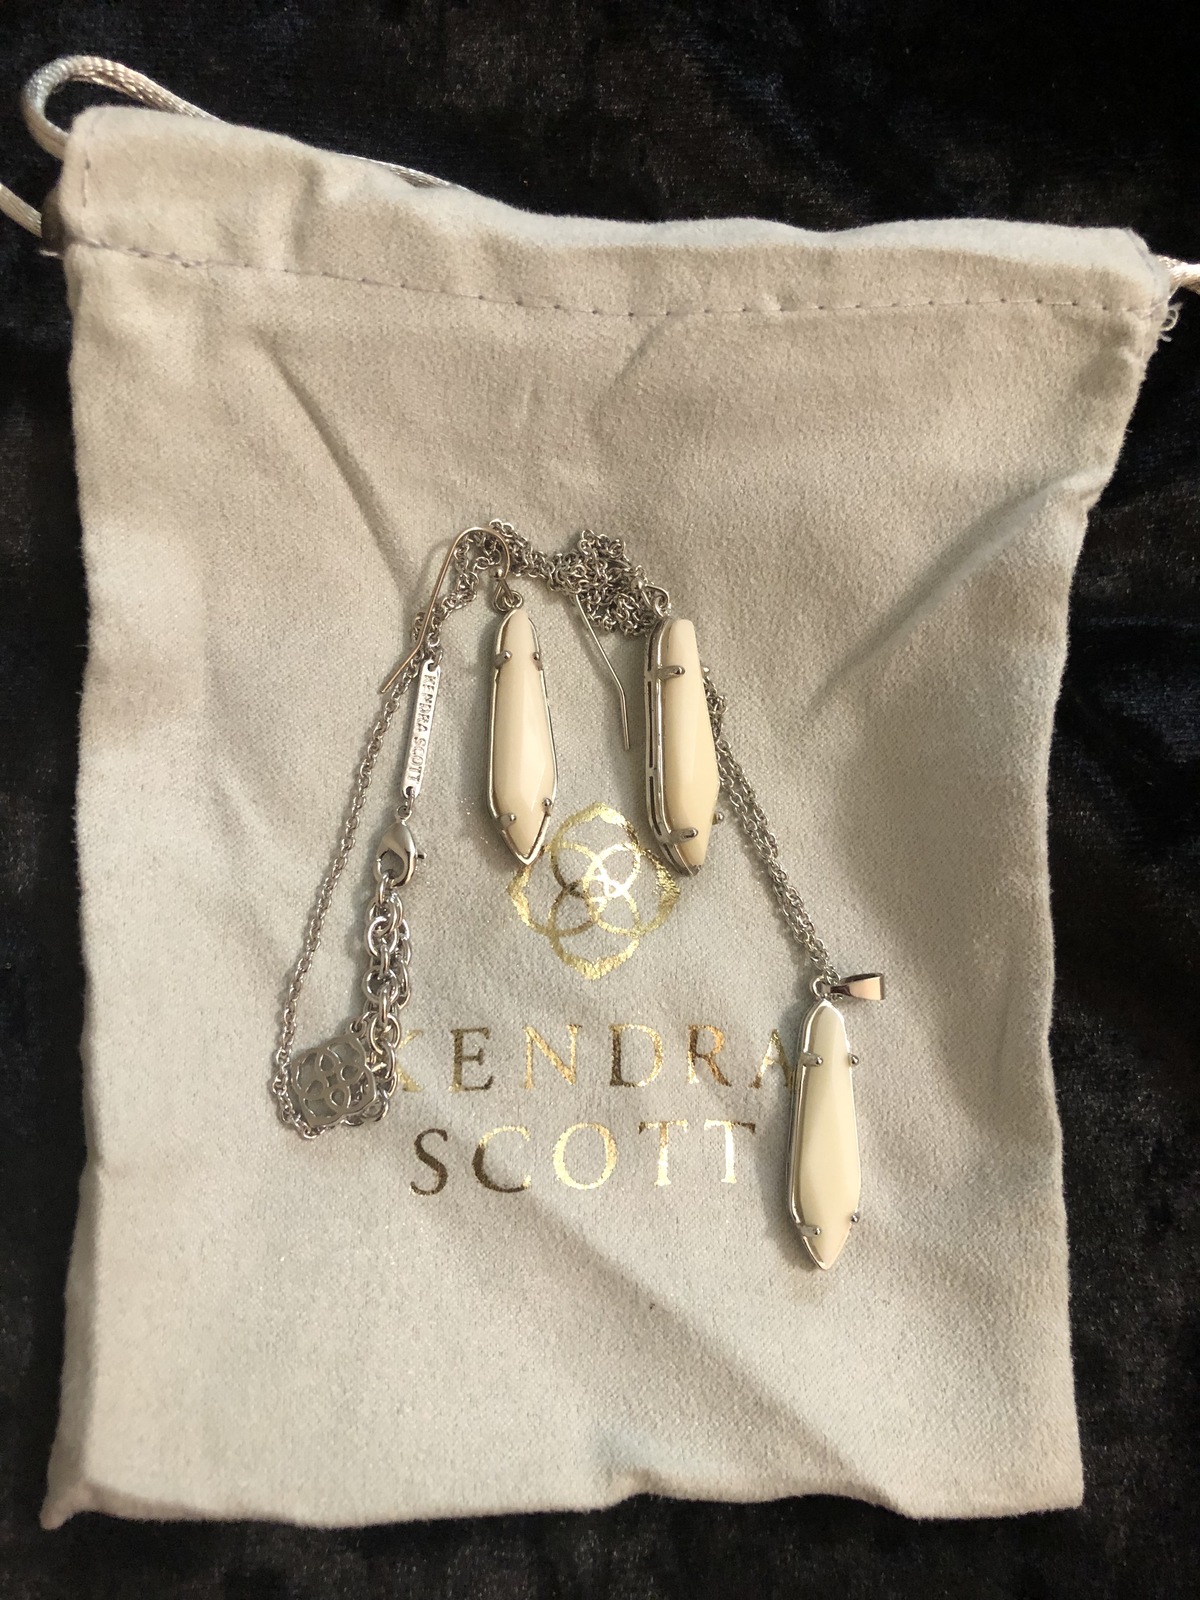 Kendra Scott Silver/White Earring Necklace Set - $119.95